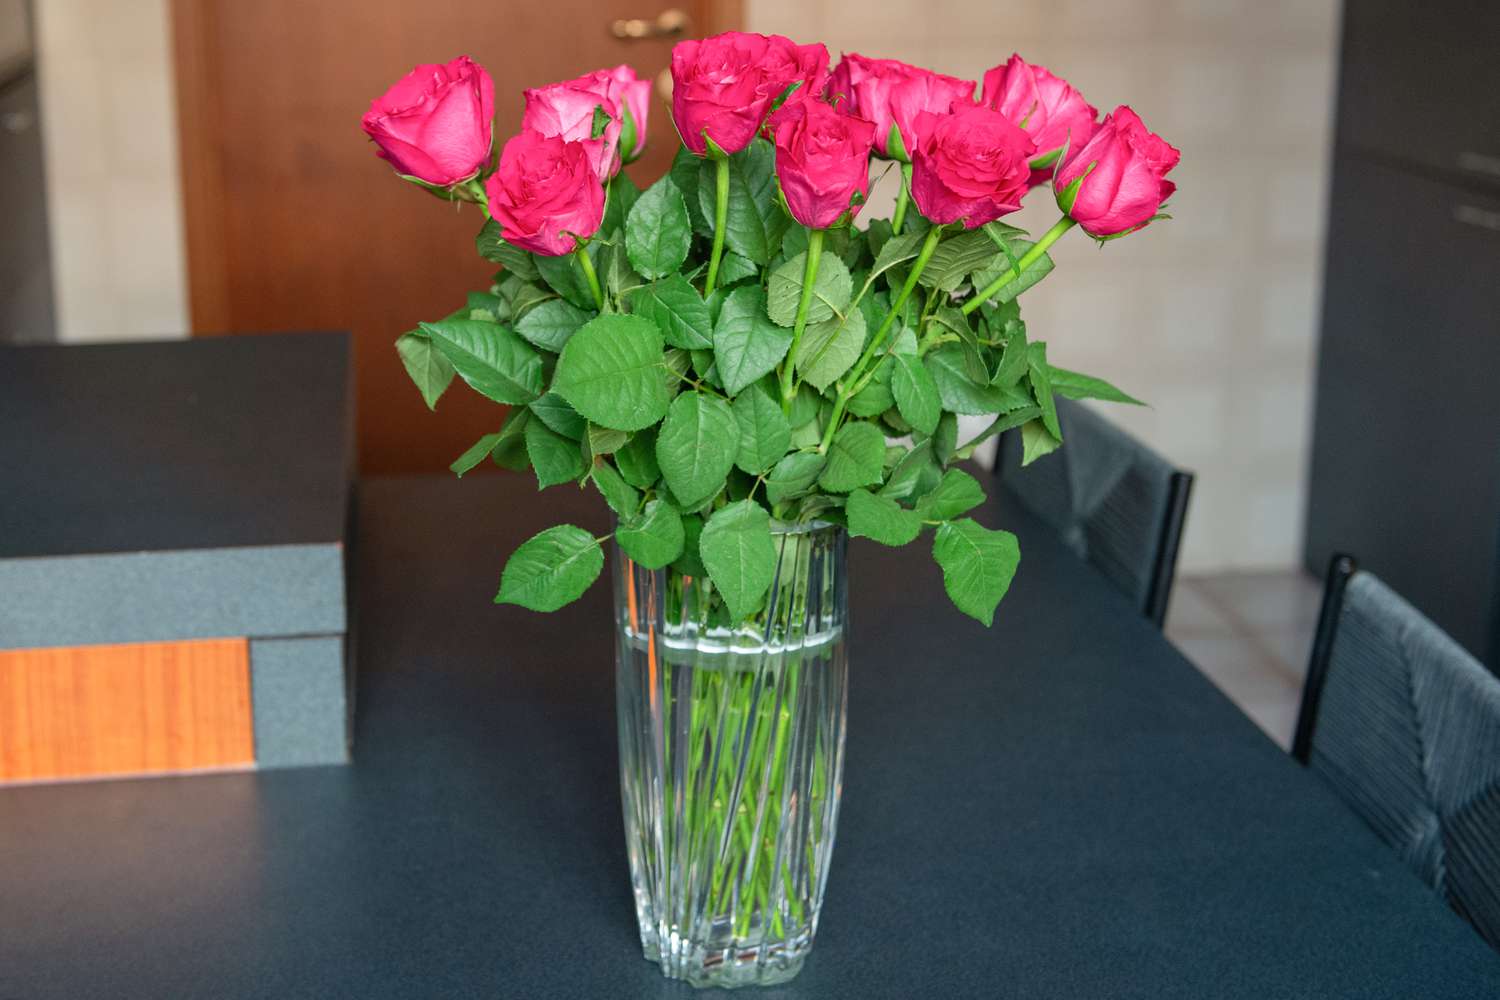 Hastes de rosas cor-de-rosa dispostas em vaso de vidro com água sobre a mesa